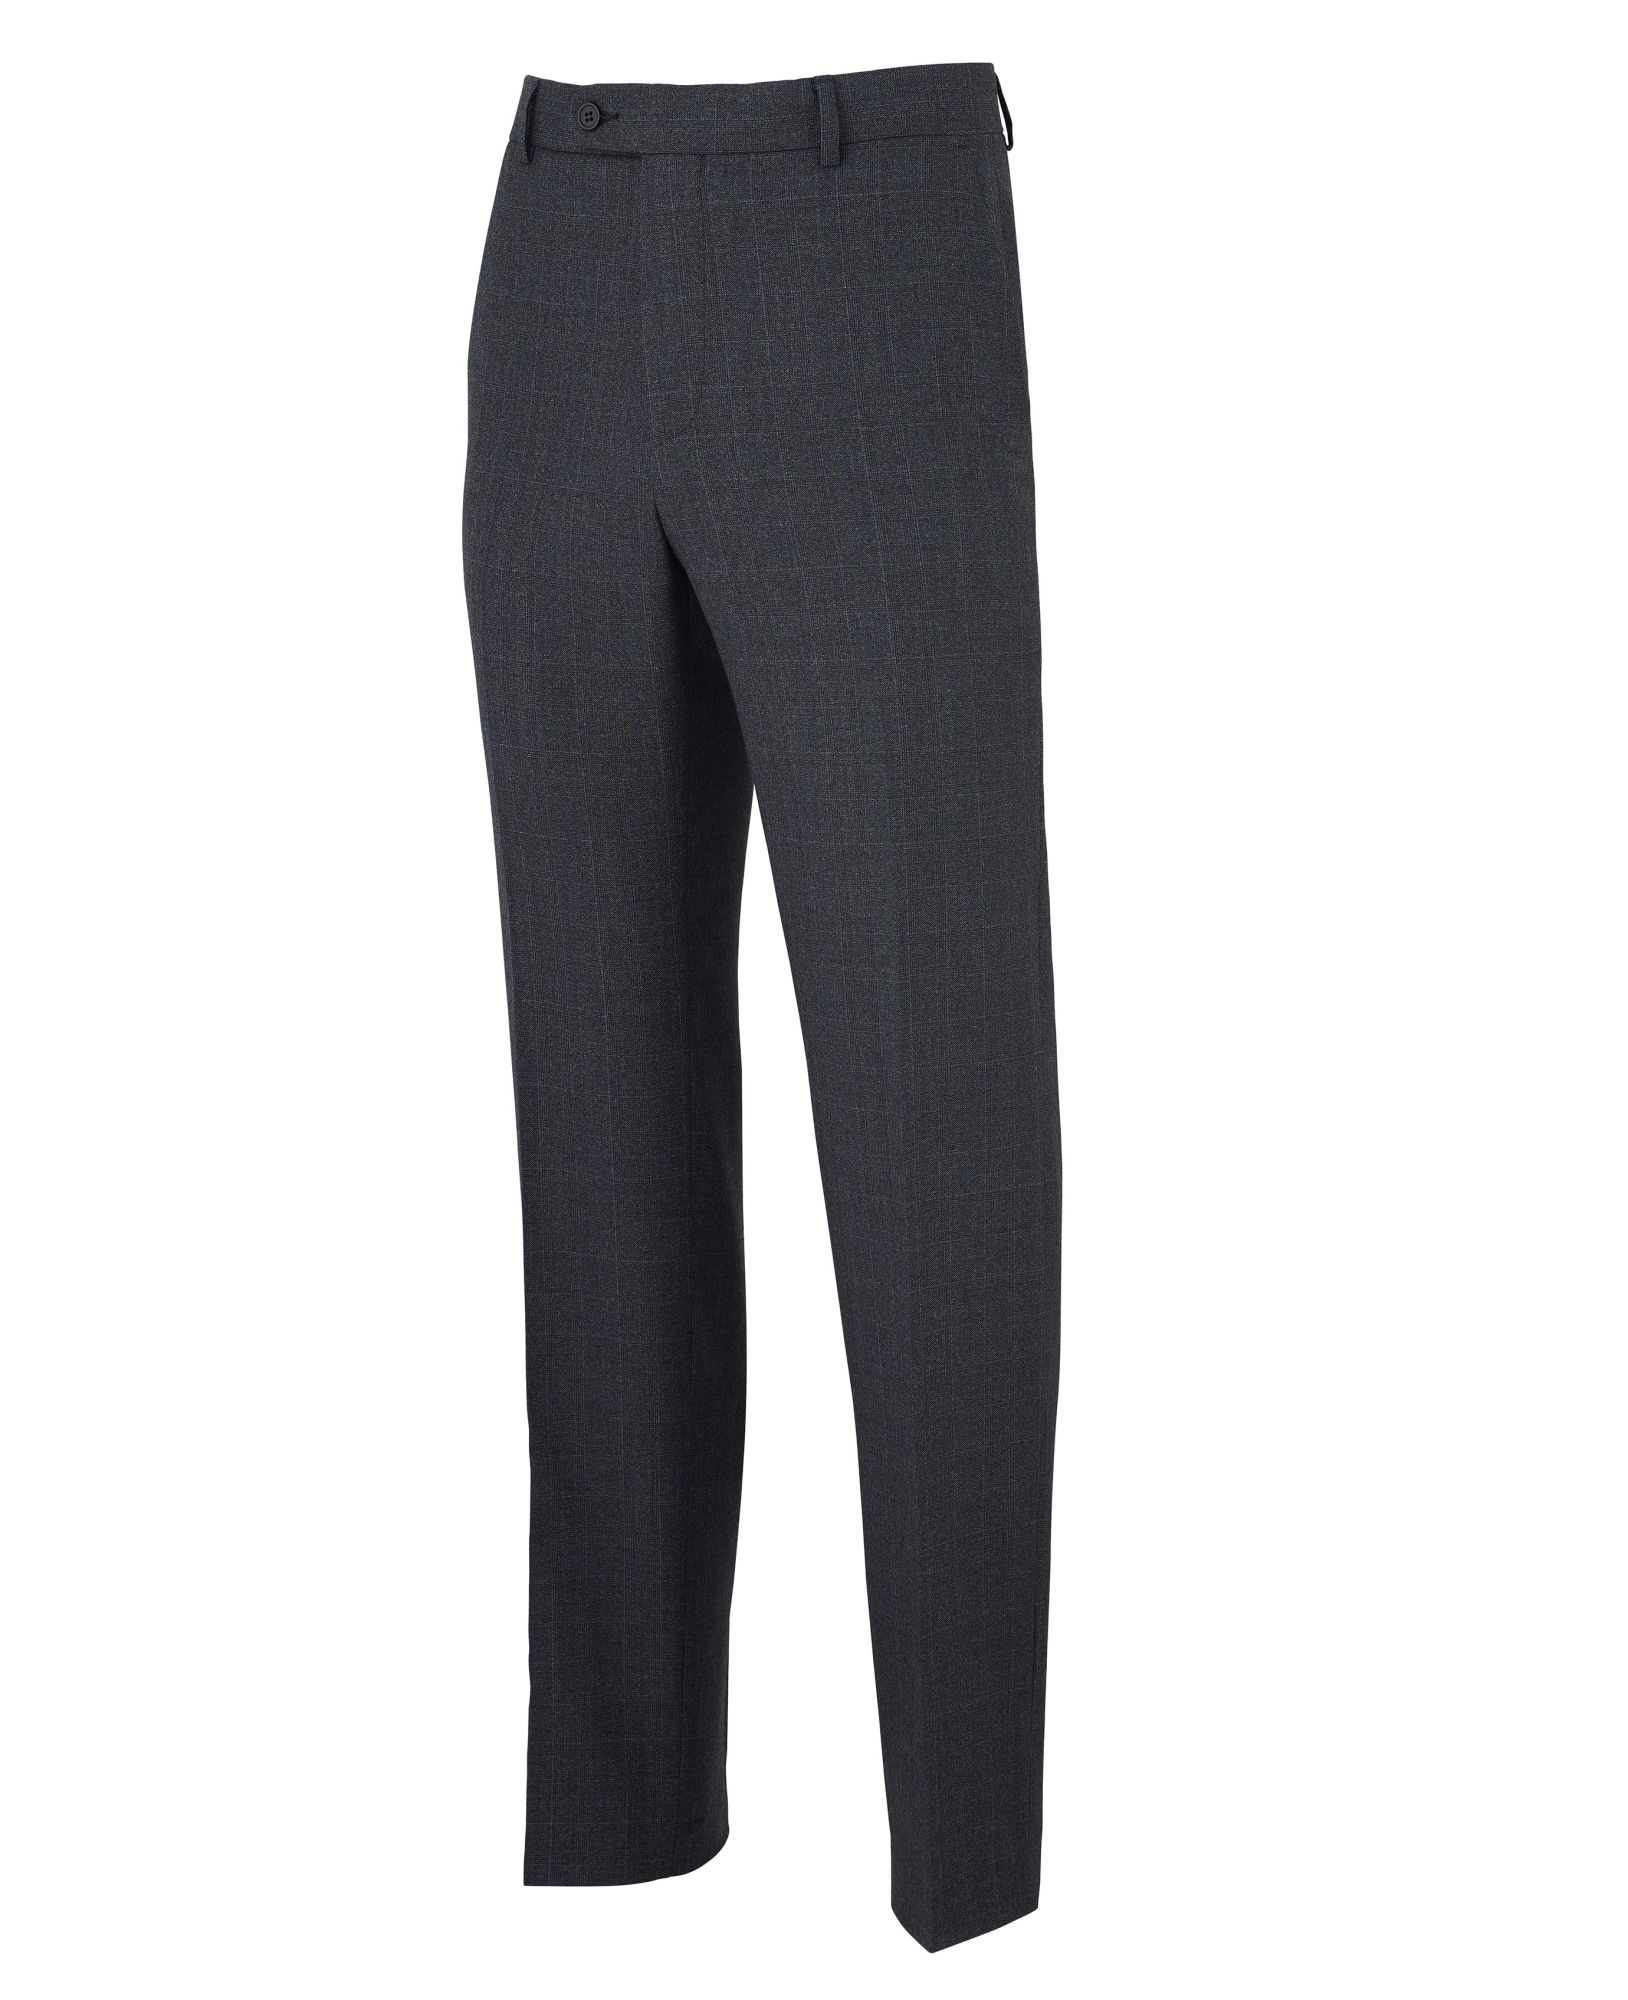 Savile Row Company Mens Black Wool-Blend Suit Trousers